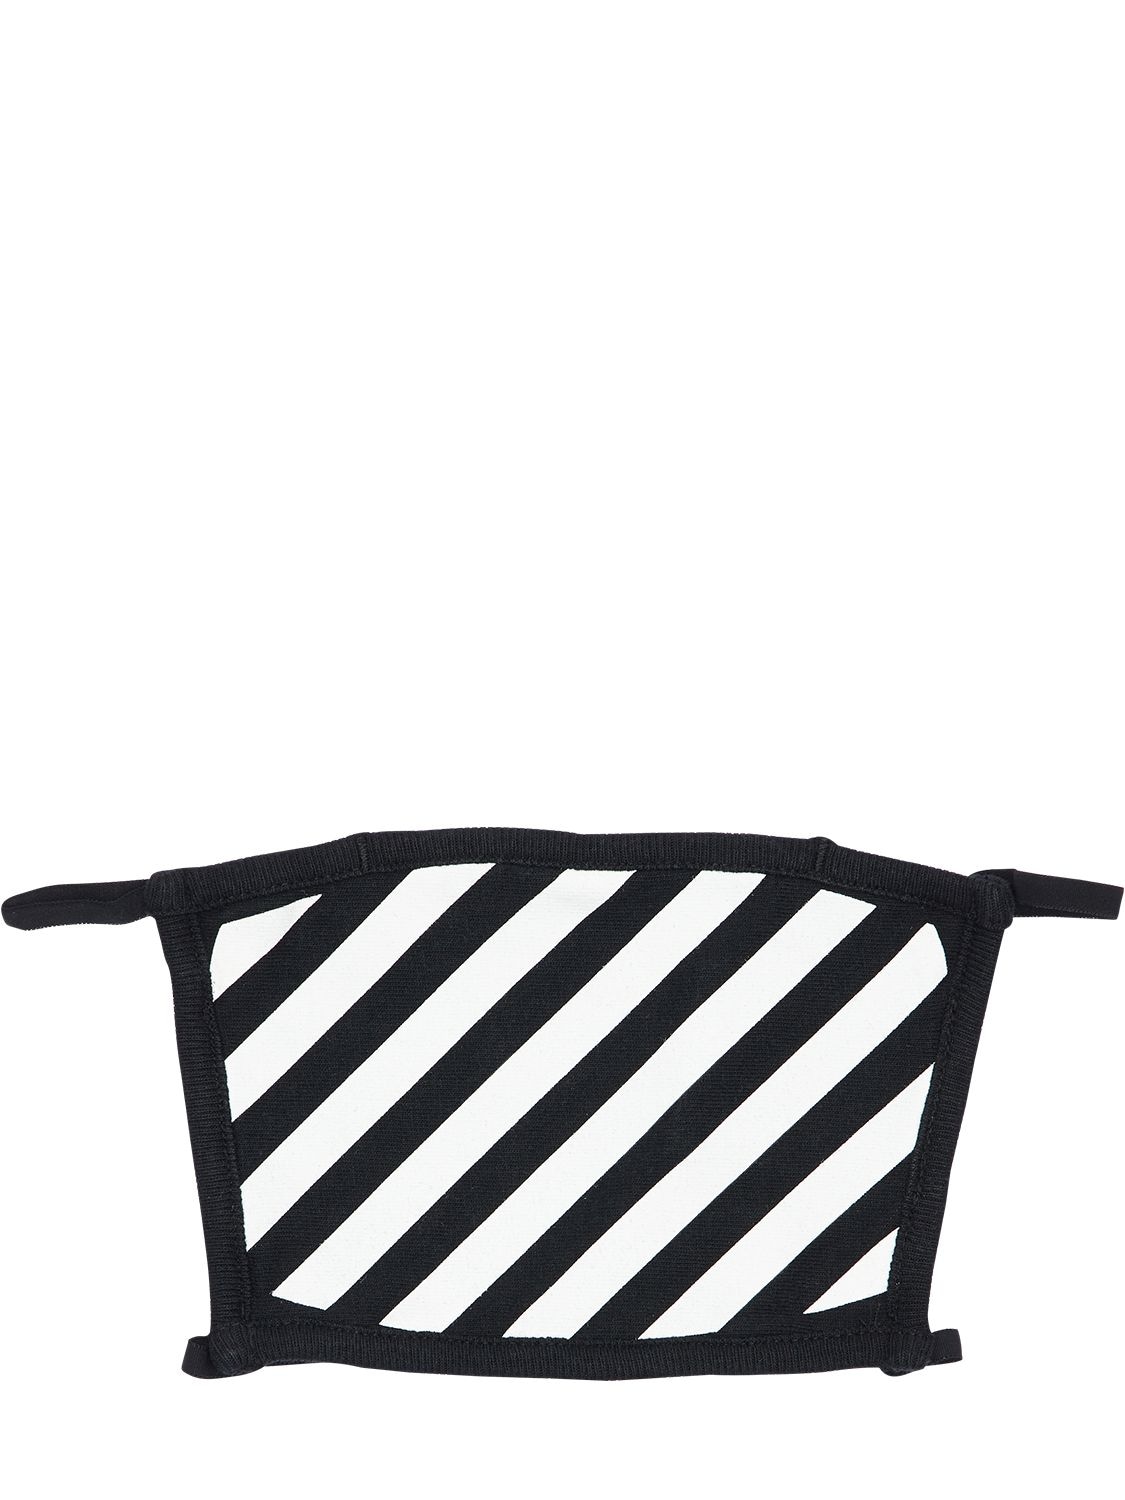 Diagonal Stripes Cotton Face Mask